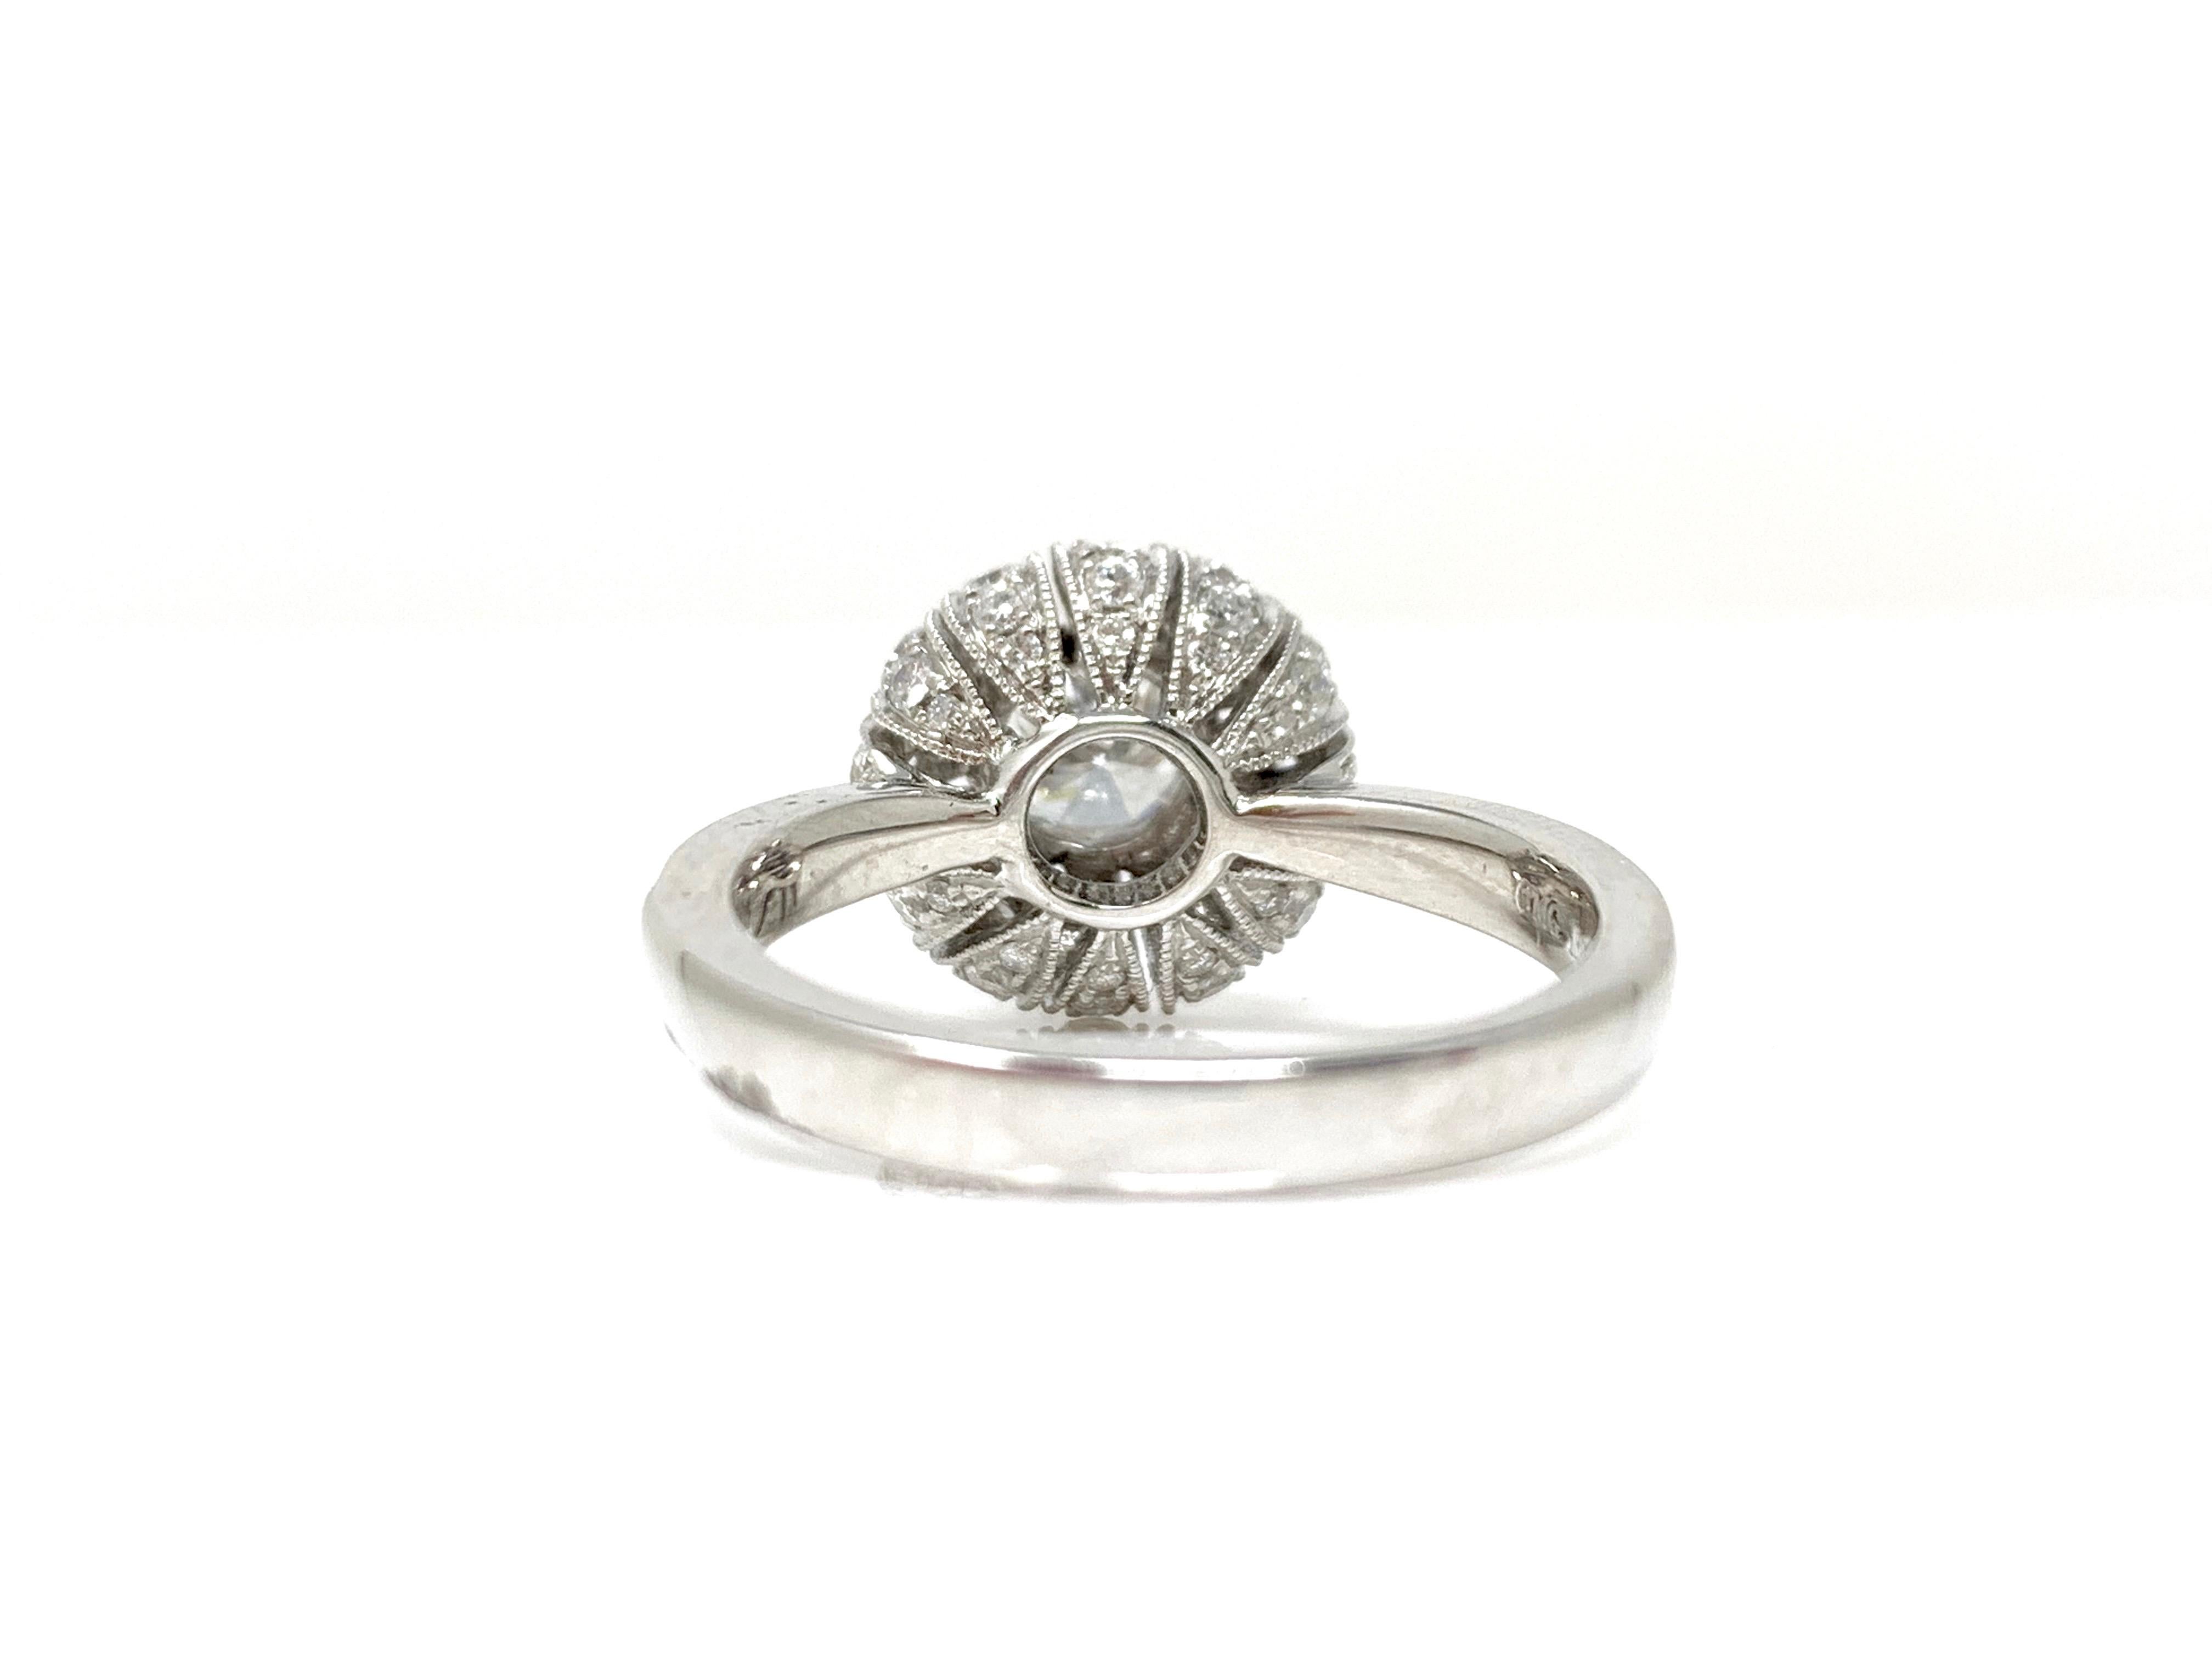 Old European Cut White Round Brilliant Cut Diamond Engagement Ring in 18 Karat White Gold For Sale